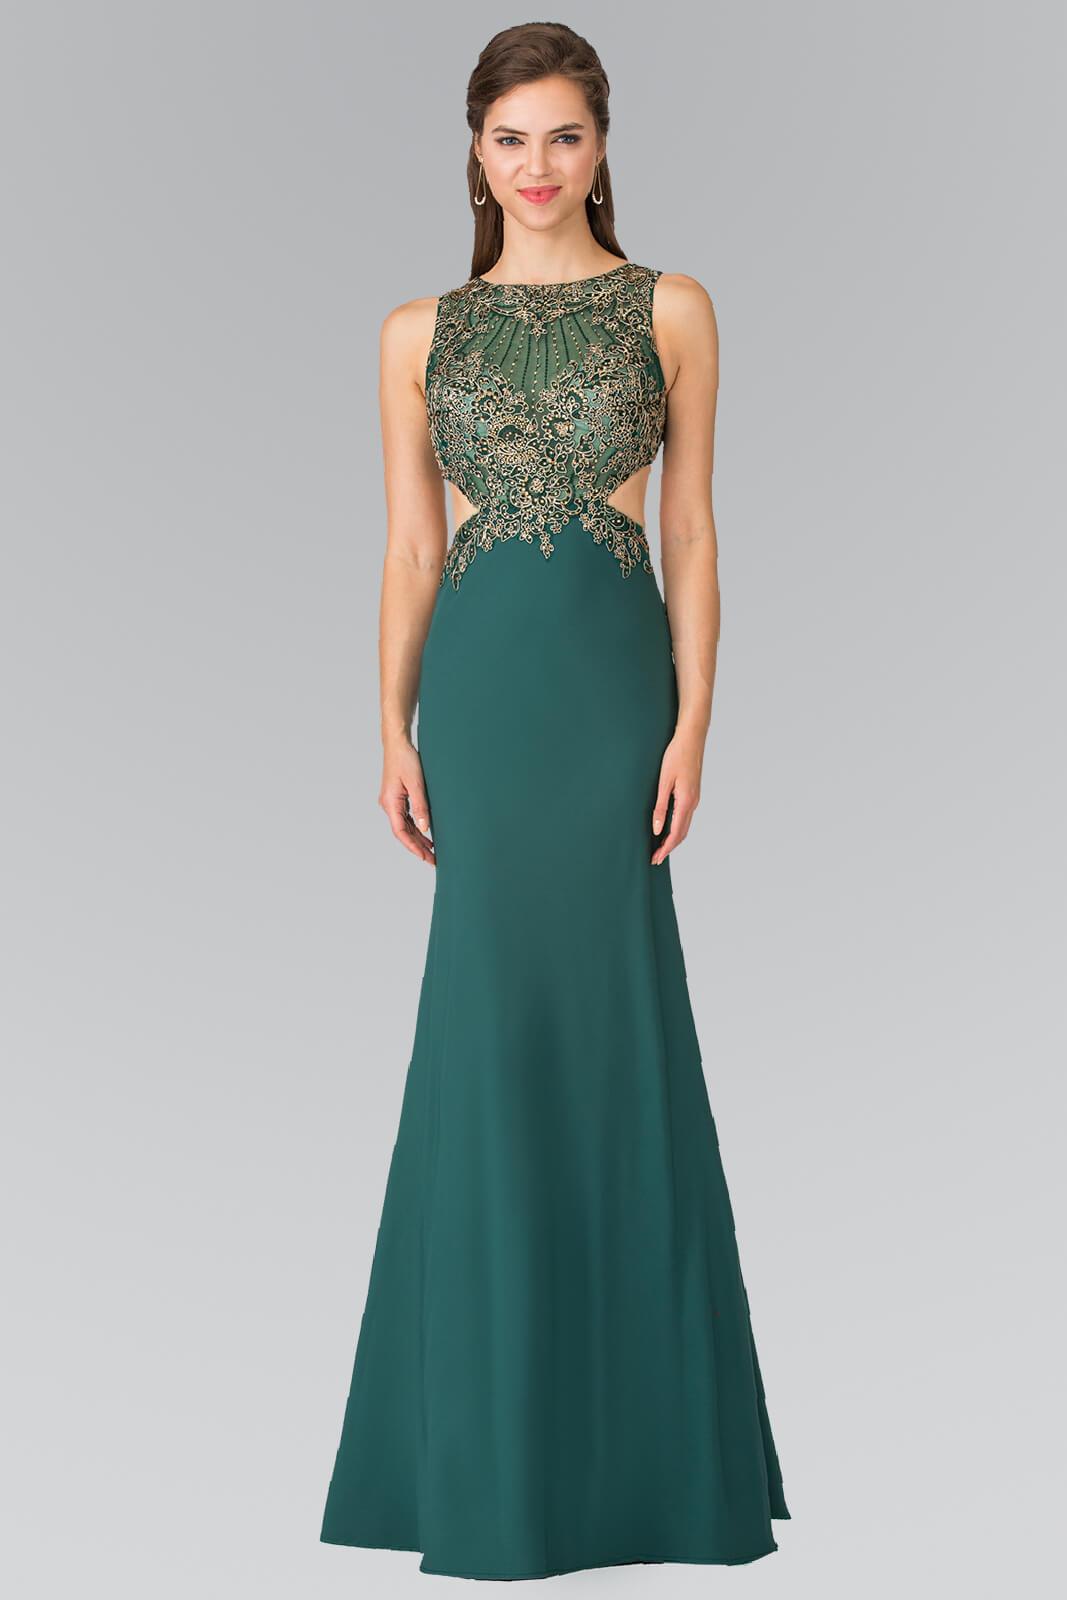 Long Formal Side Cut Dress Evening Prom Gown - The Dress Outlet Elizabeth K